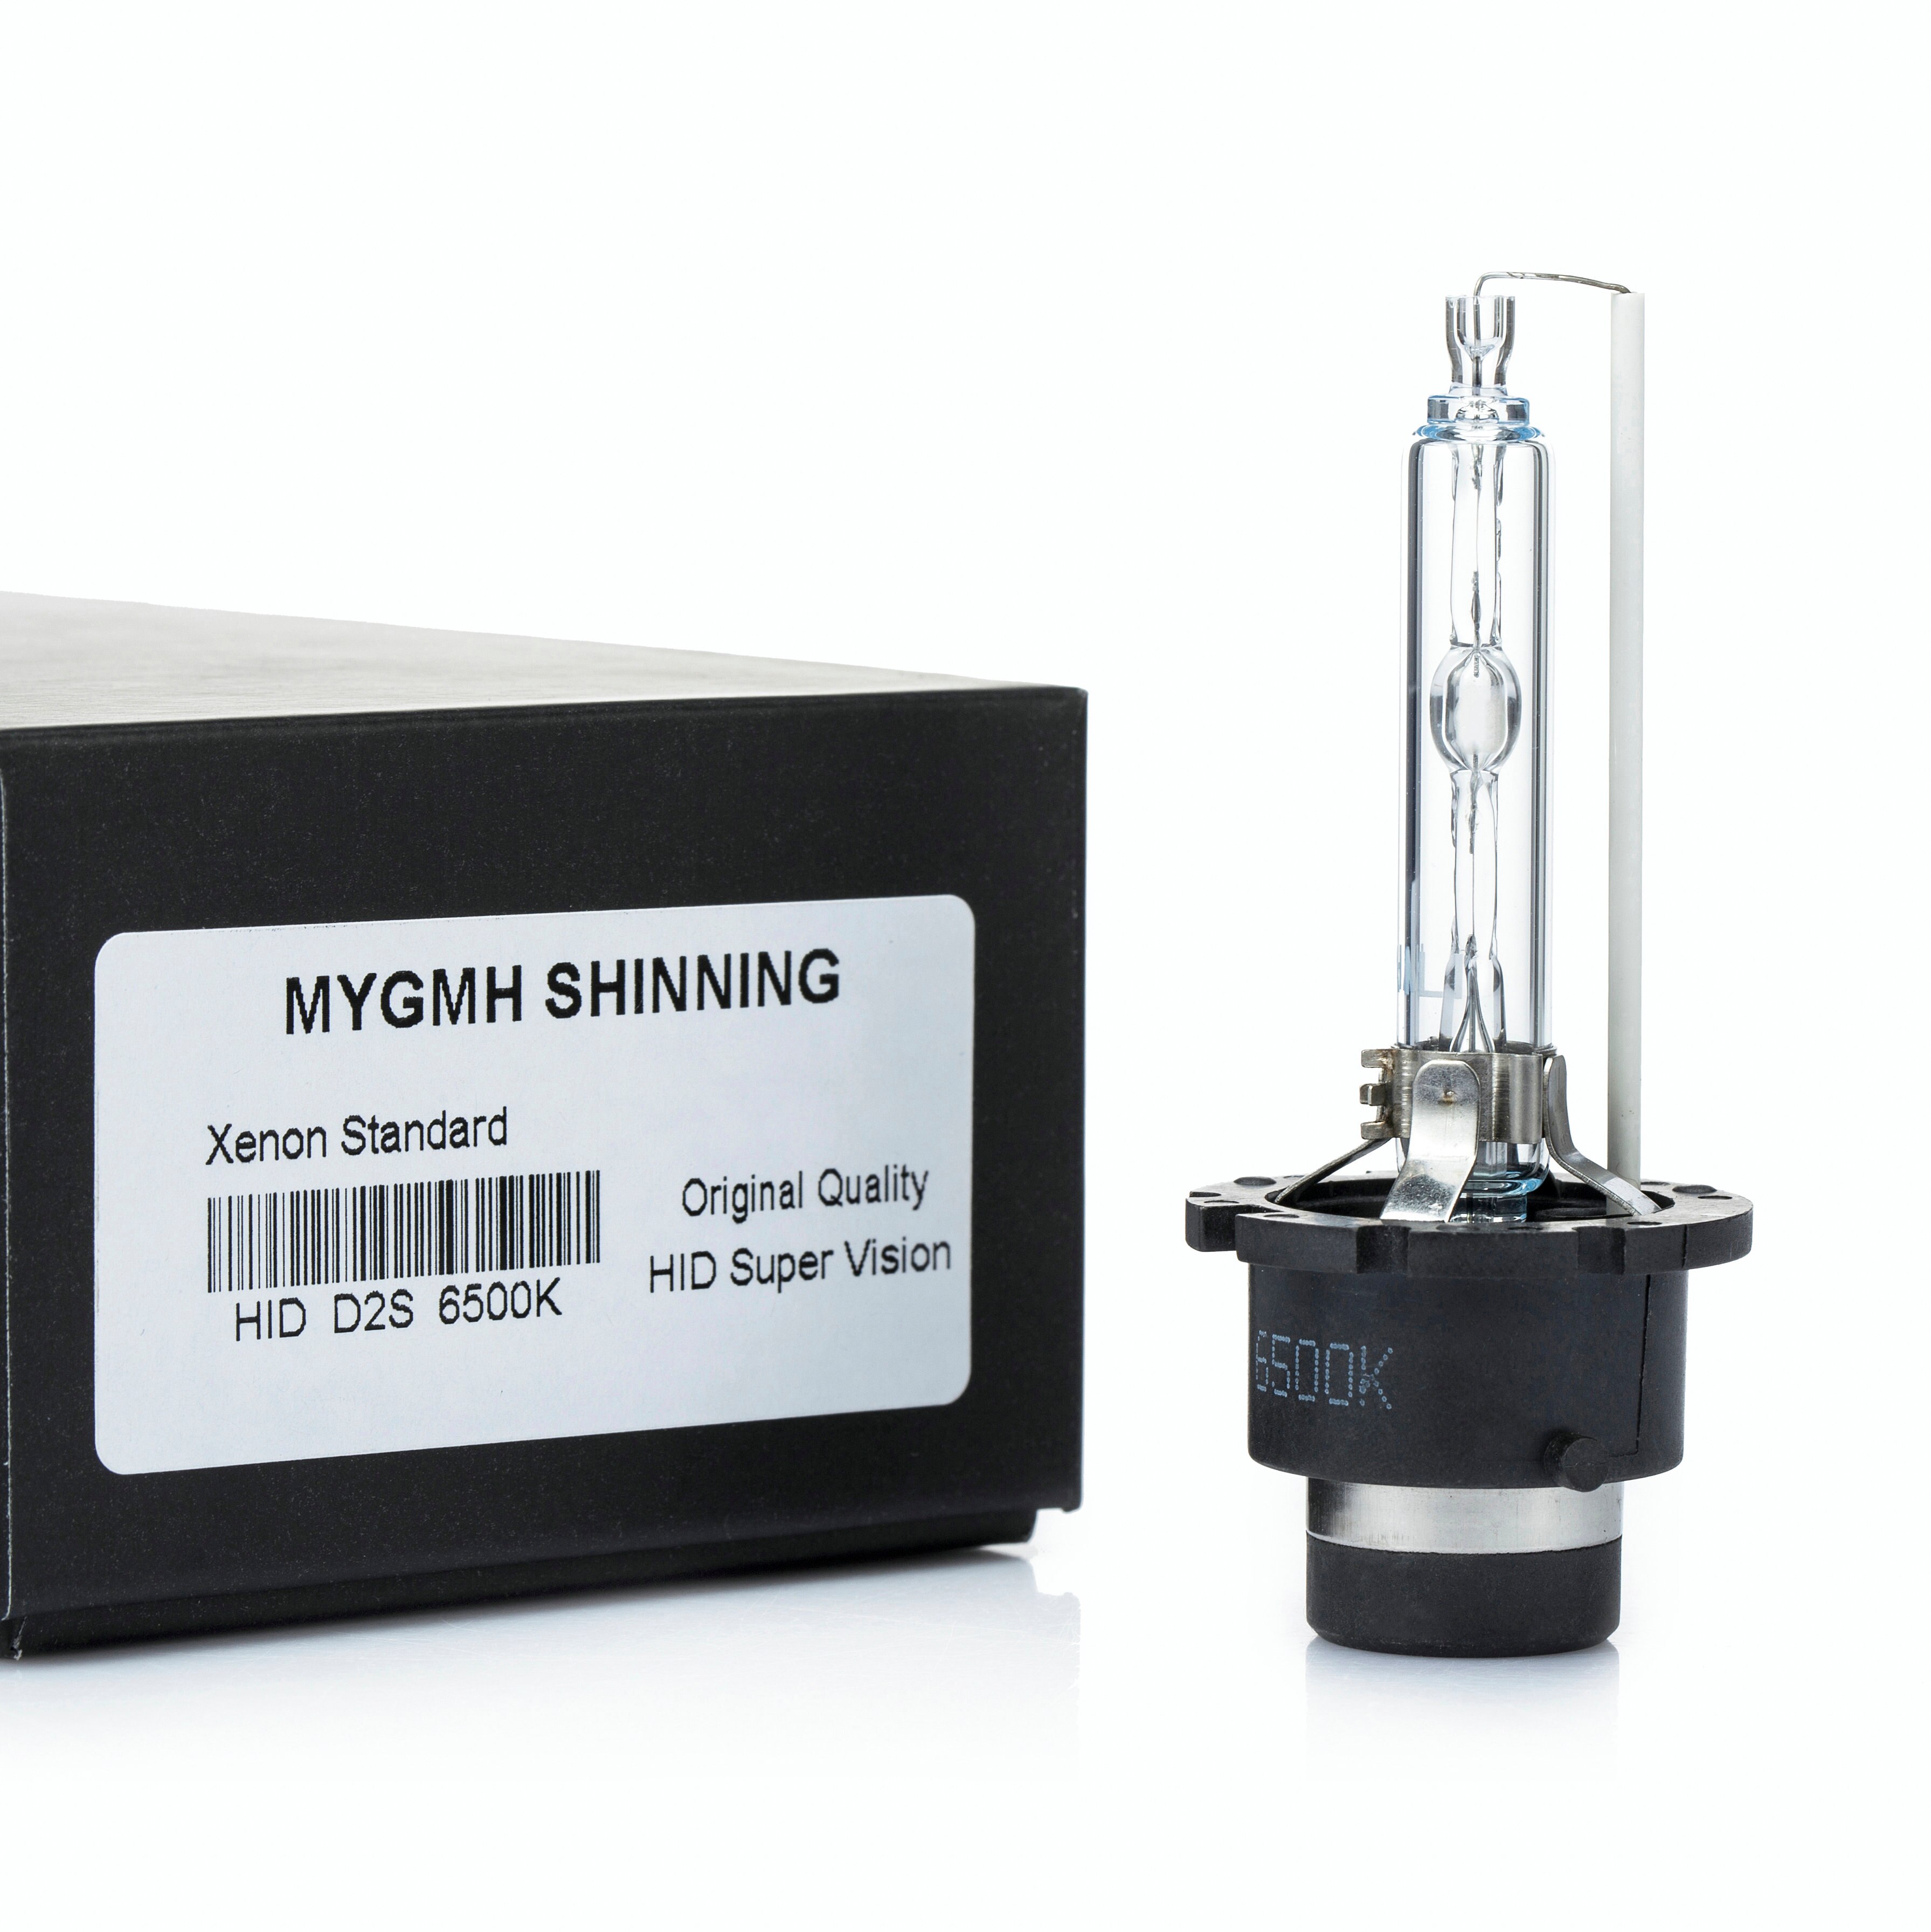 MYGMH SHINING 2 STUKS 12 V 35 W D2S Xenon Lamp Super Hoge helderheid Auto Koplamp HID Fast Bright UV gratis Super Vision 5500 K 6500 K